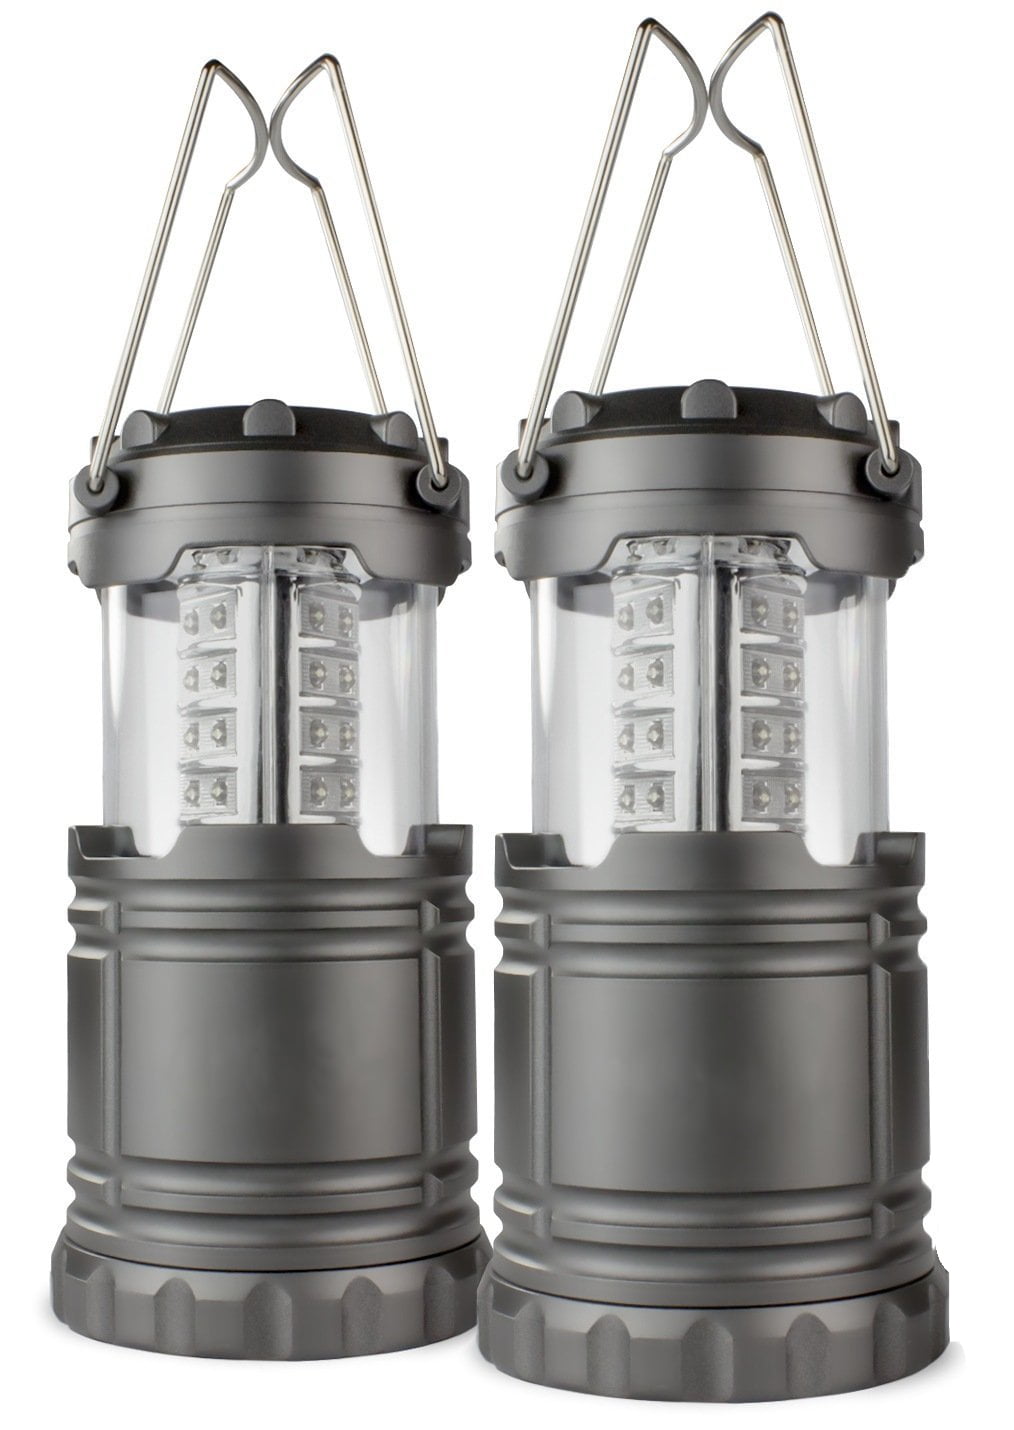 2 LED Portable Lanterns Cordless Lights Lamp Outdoor Camping Hiking Flashlight 